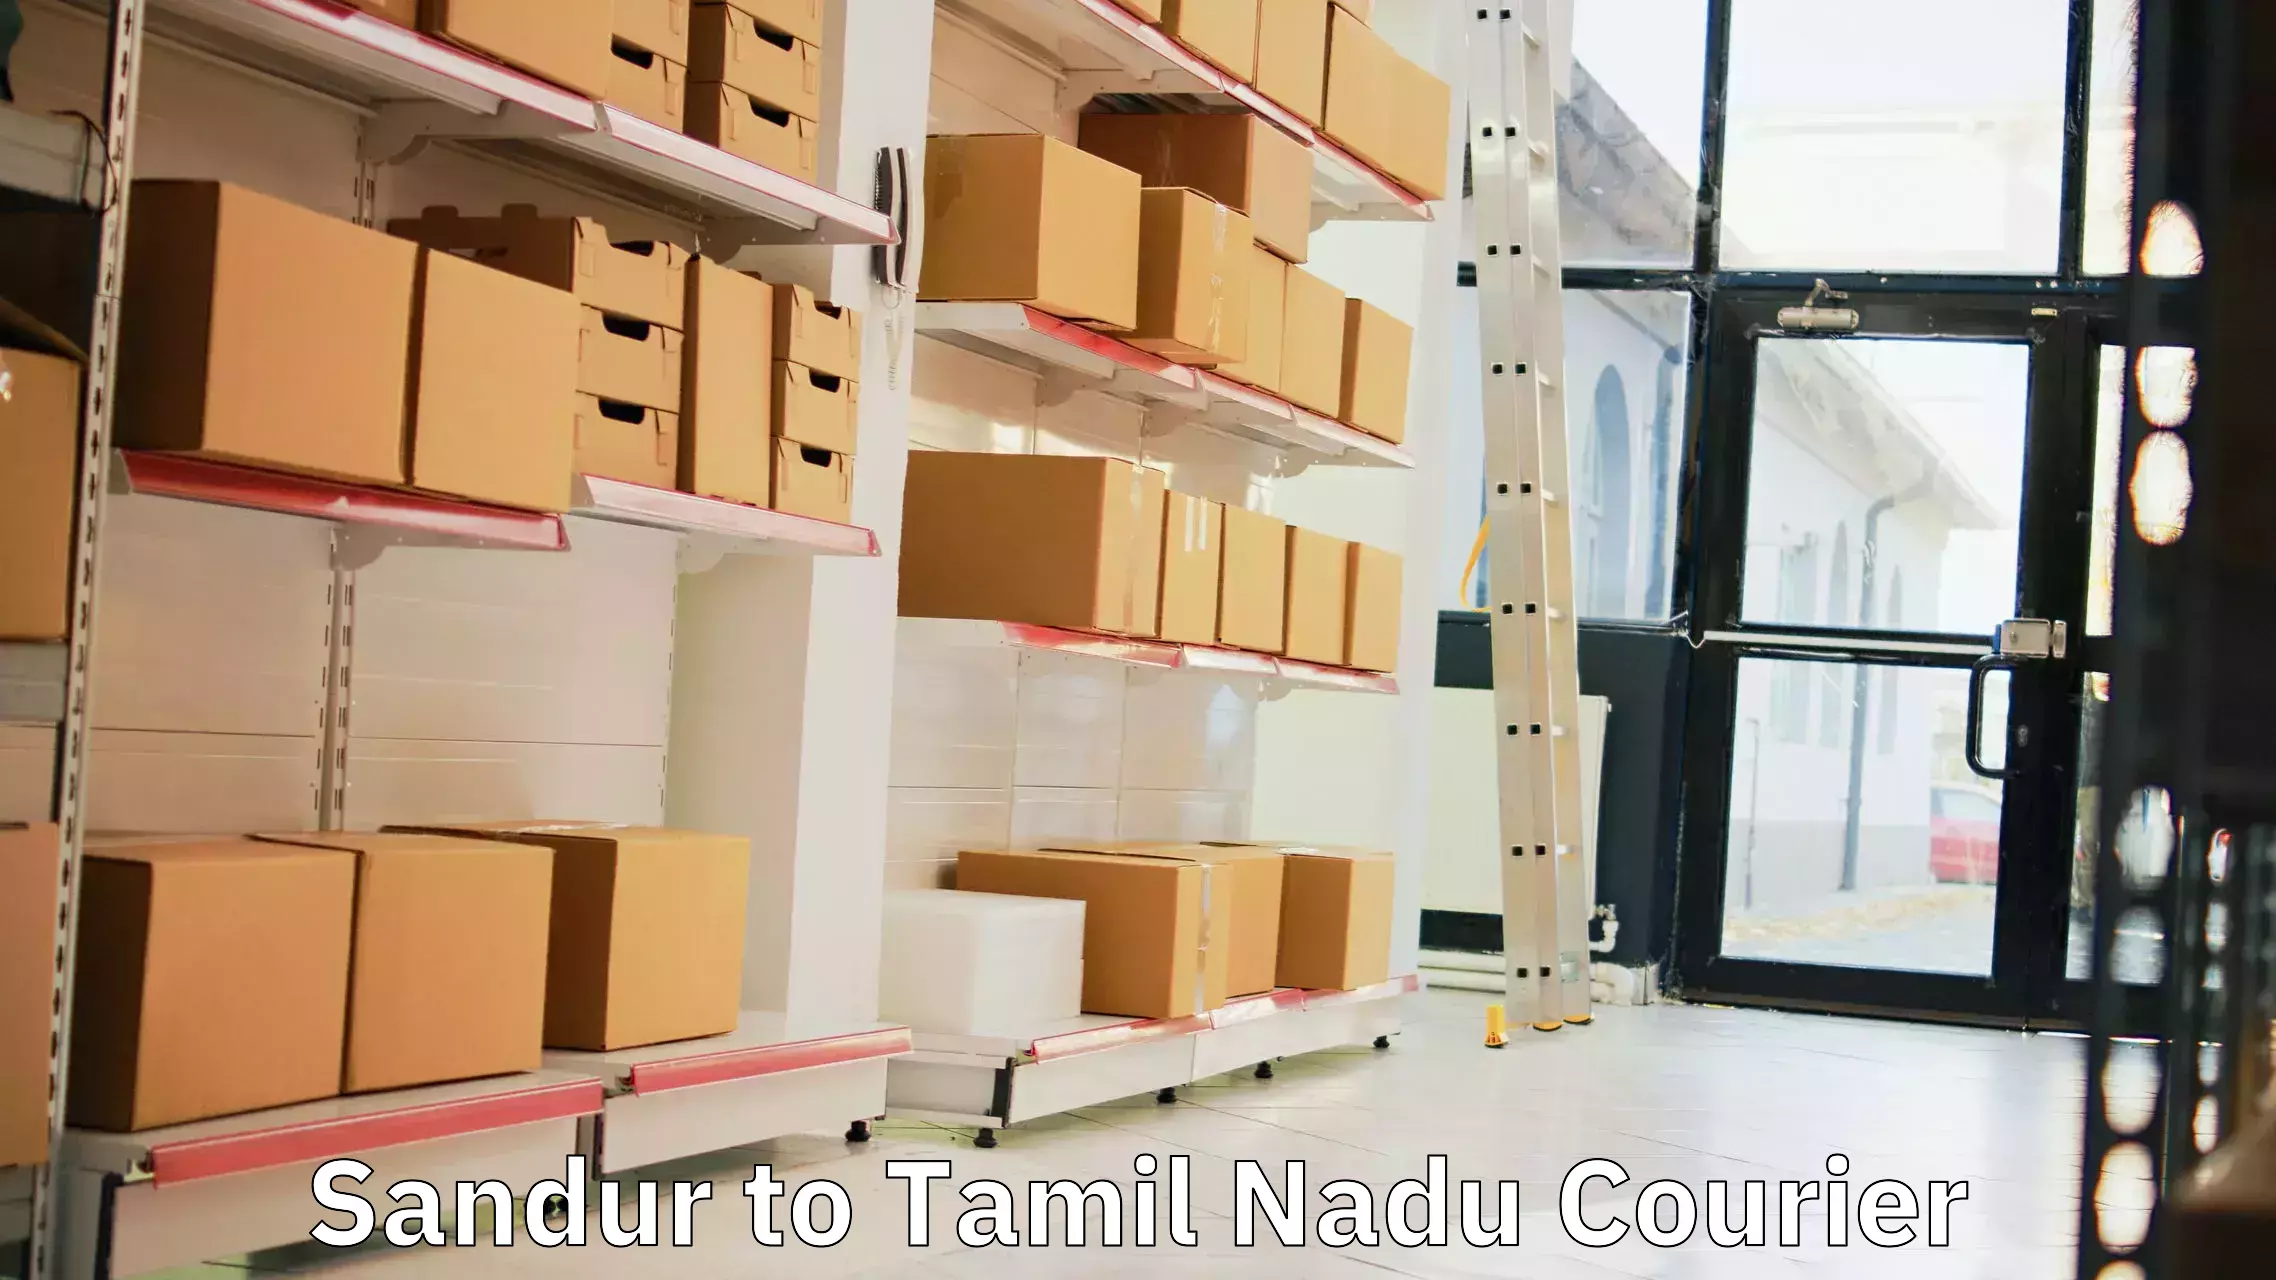 Seamless shipping experience Sandur to Coimbatore